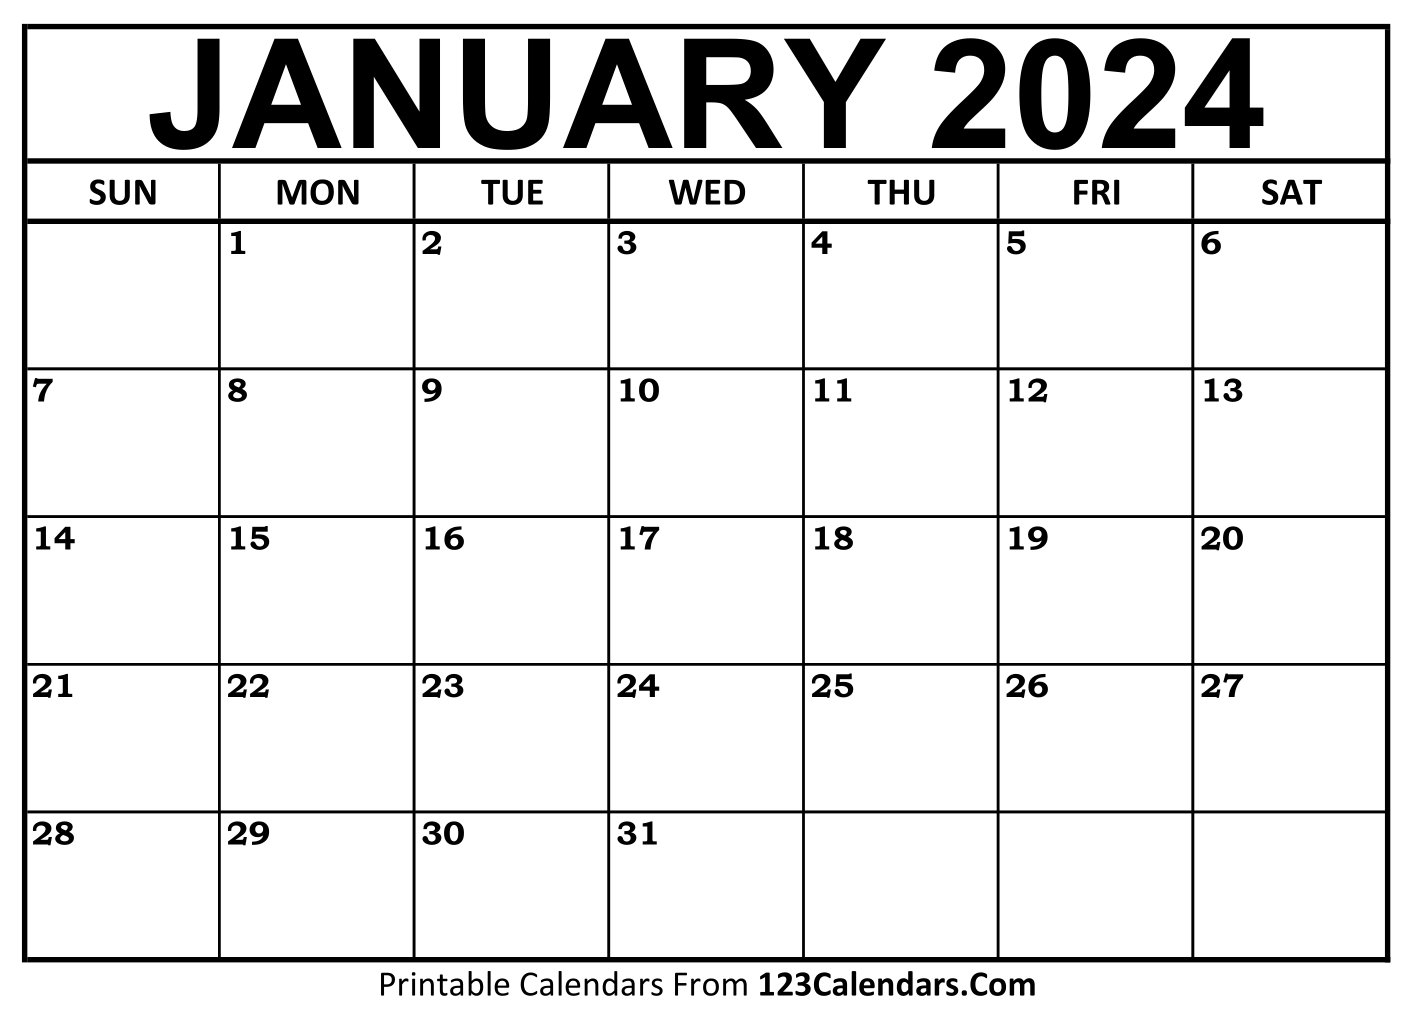 Printable January 2024 Calendar Templates - 123Calendars for Printable January 2024 Calendar Free